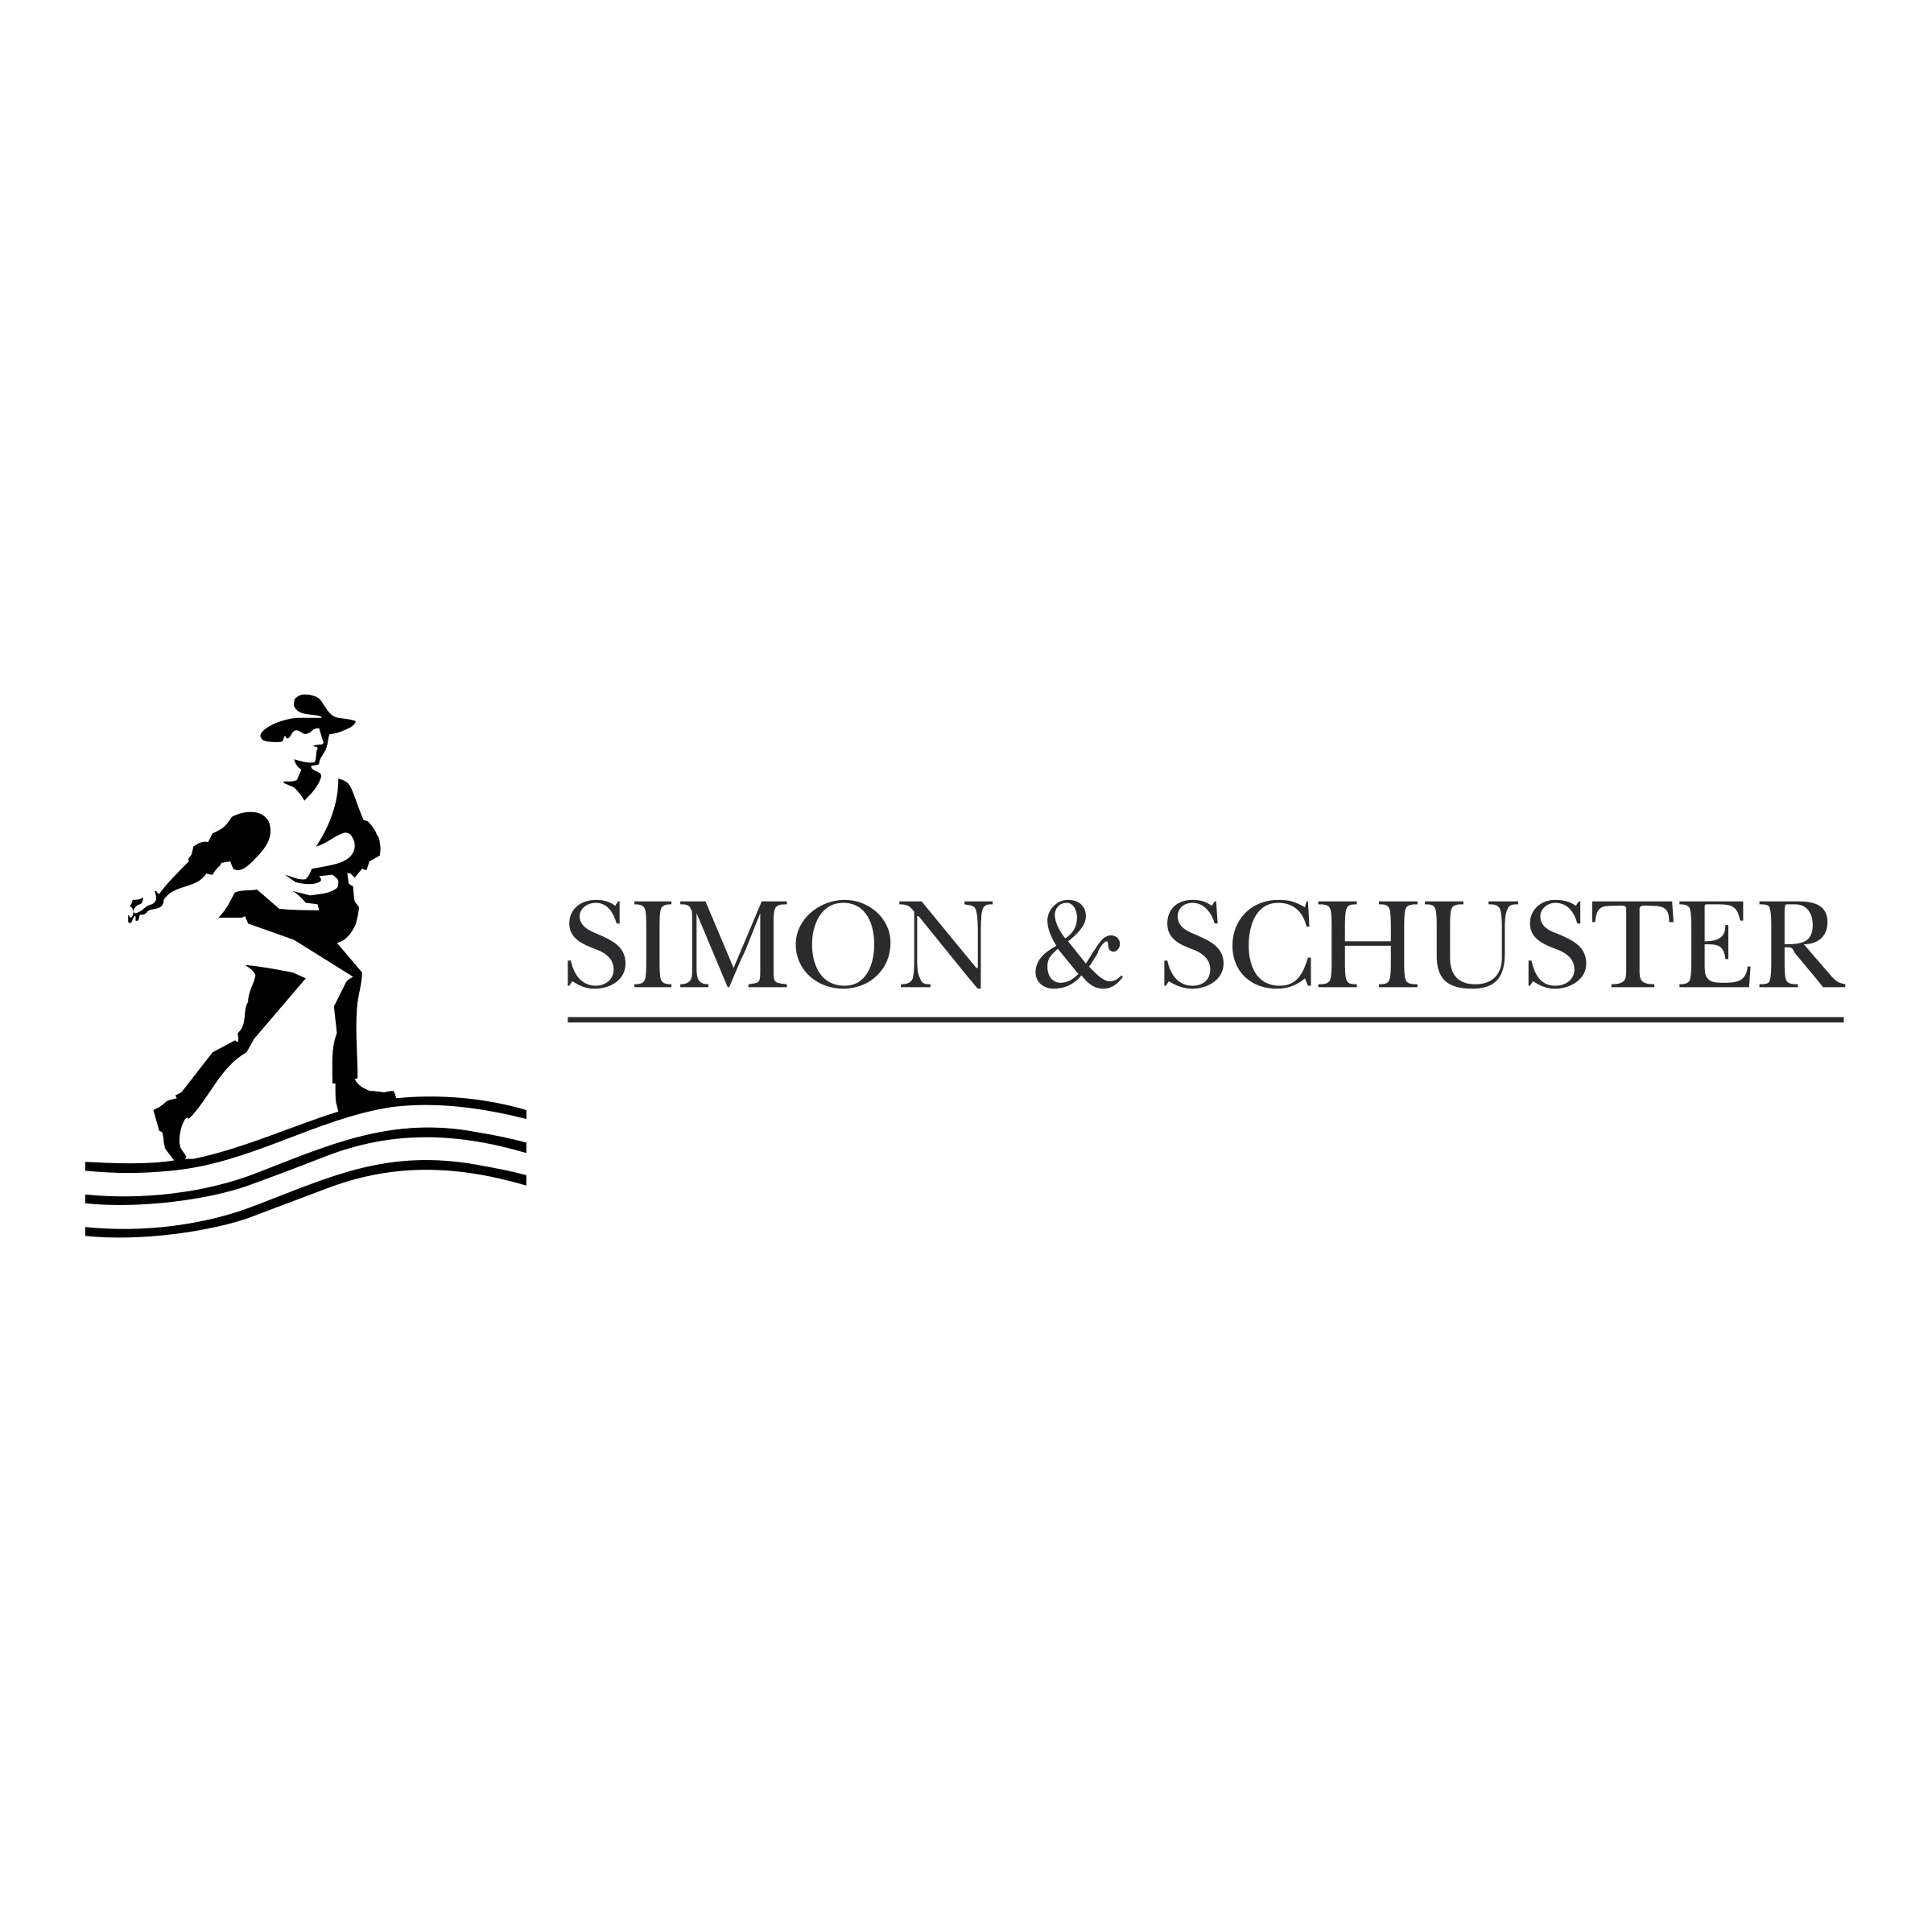 simon-schuster-logo-png-transparent.png